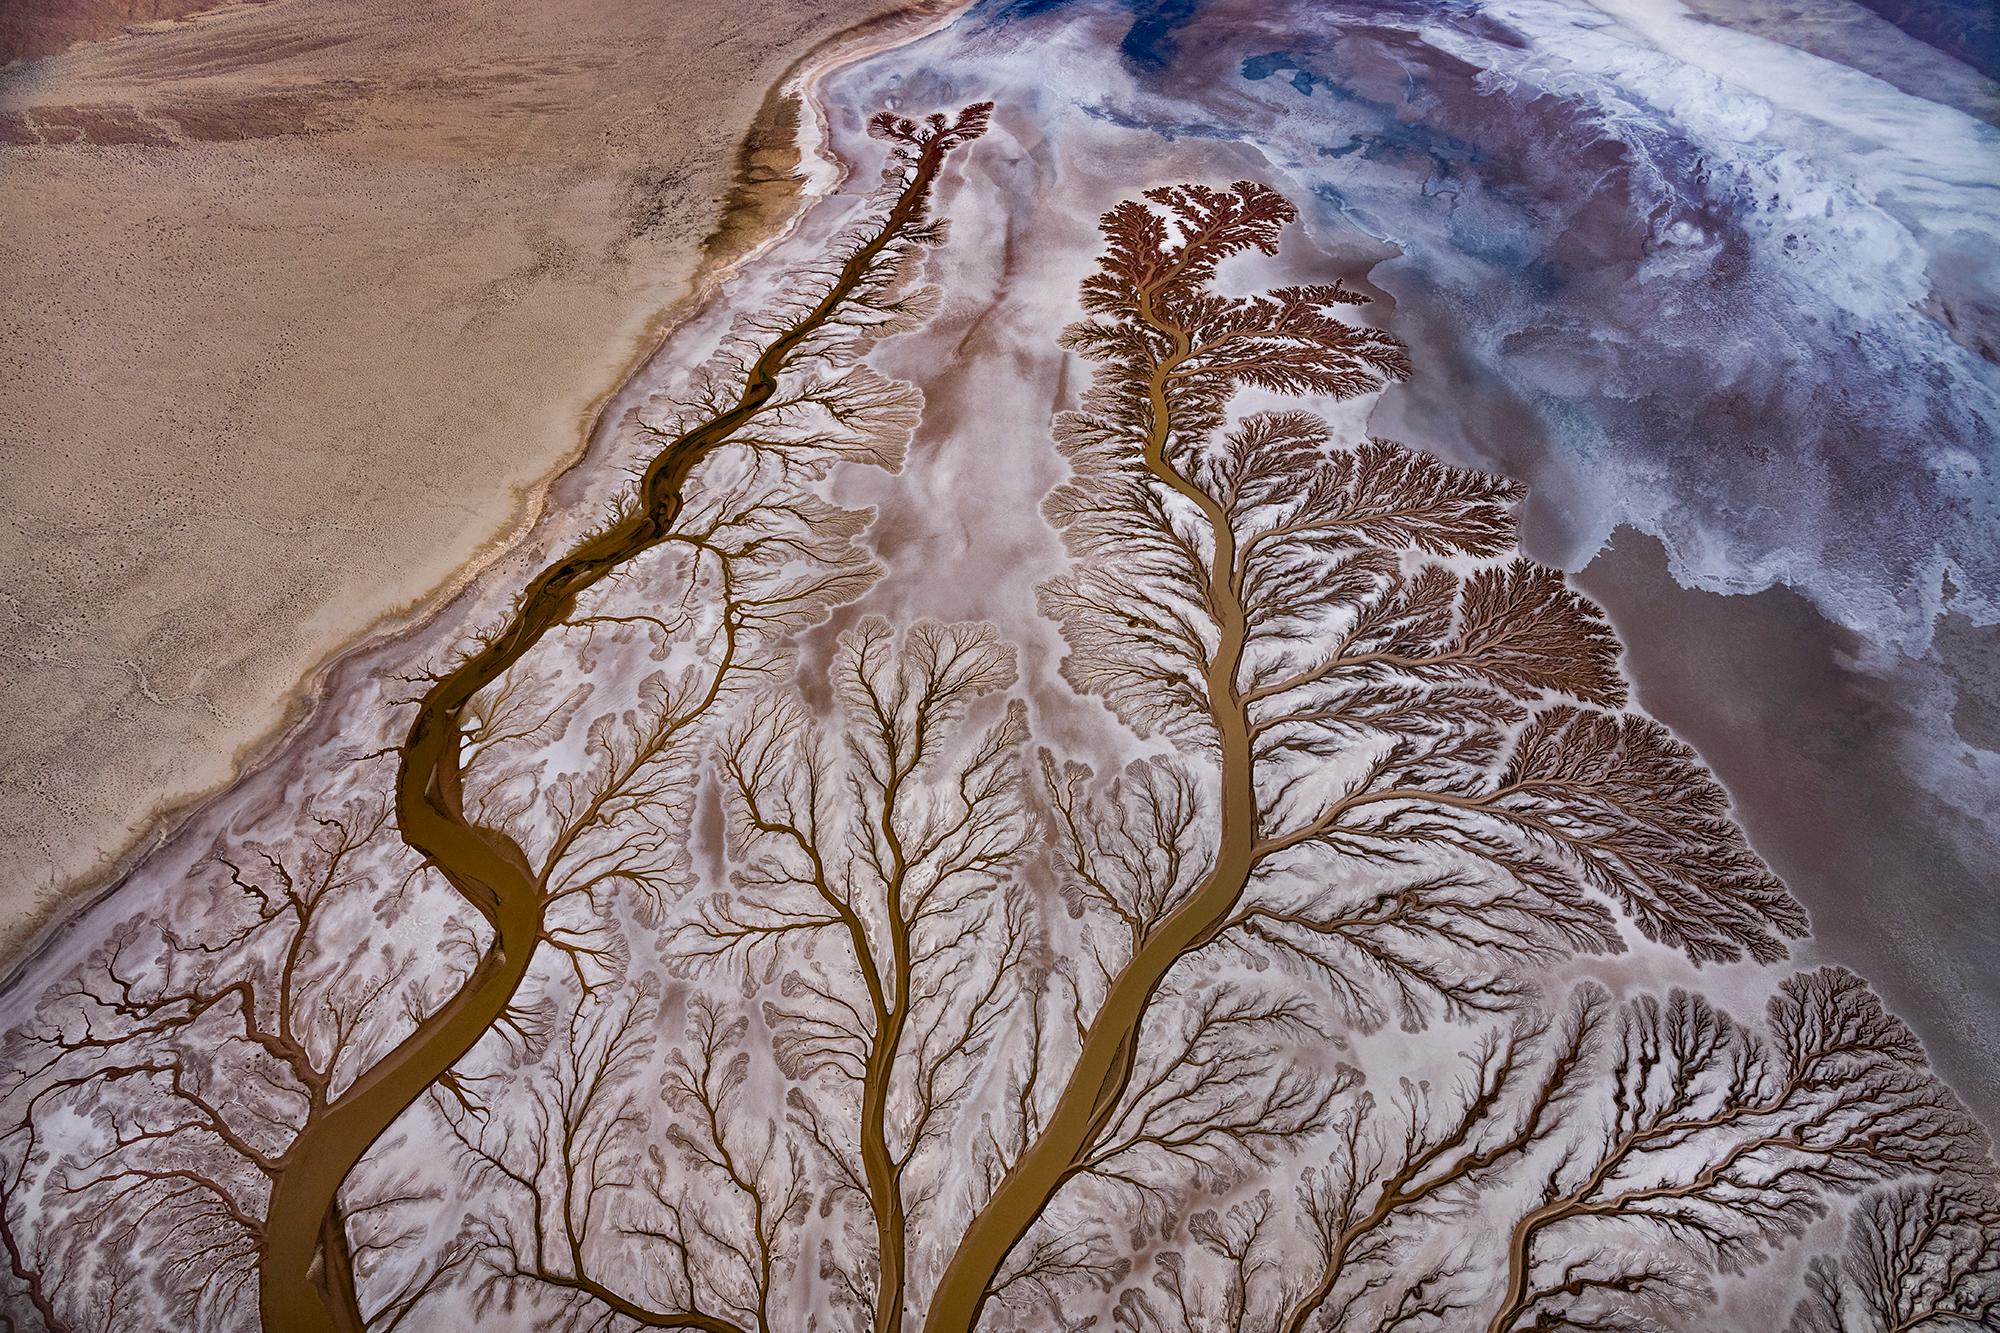 Paul Nicklen Color Photograph - Gaia's Lungs 